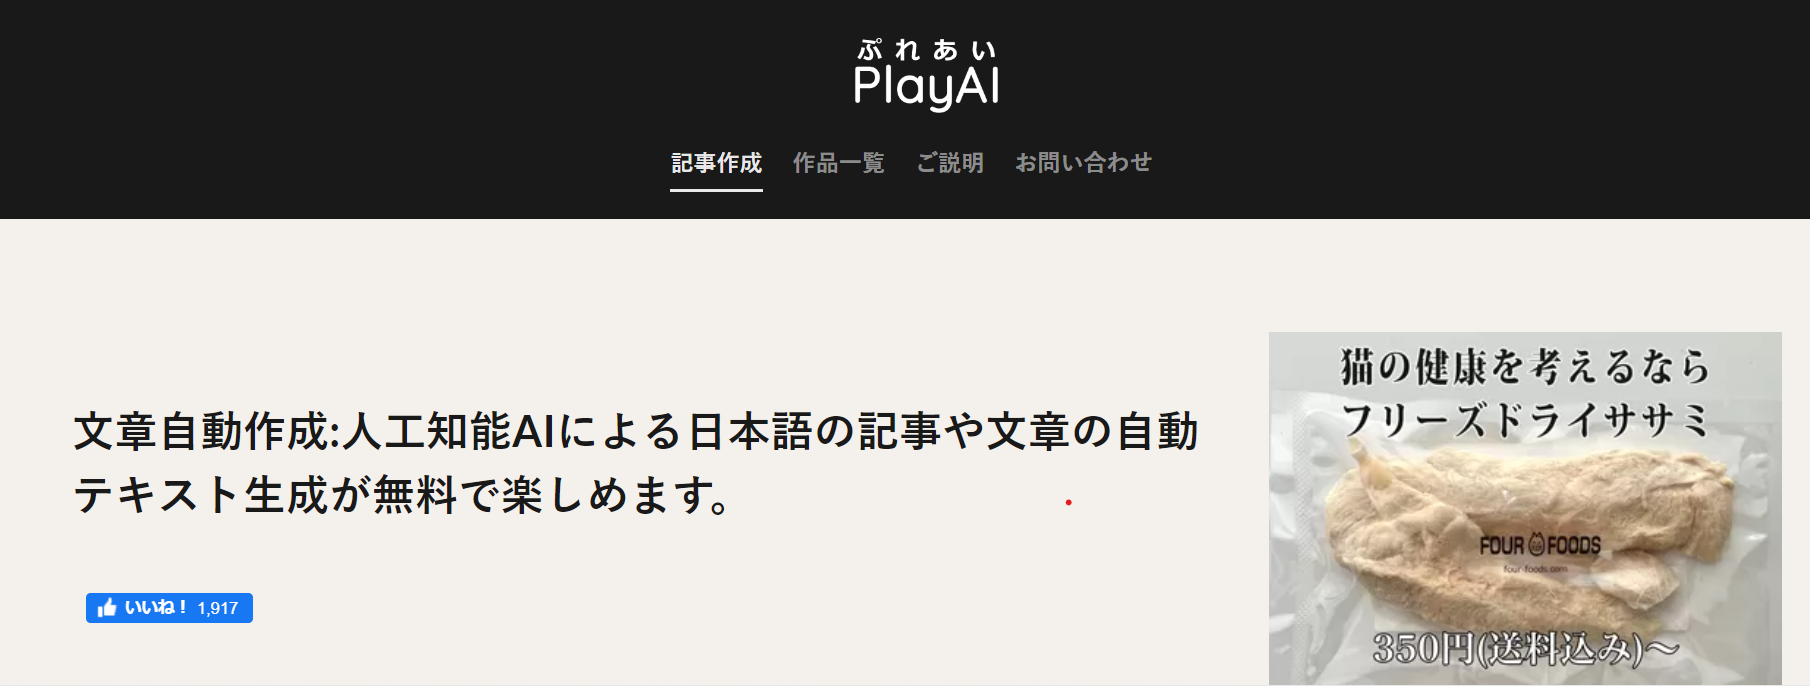 5.Play-AI